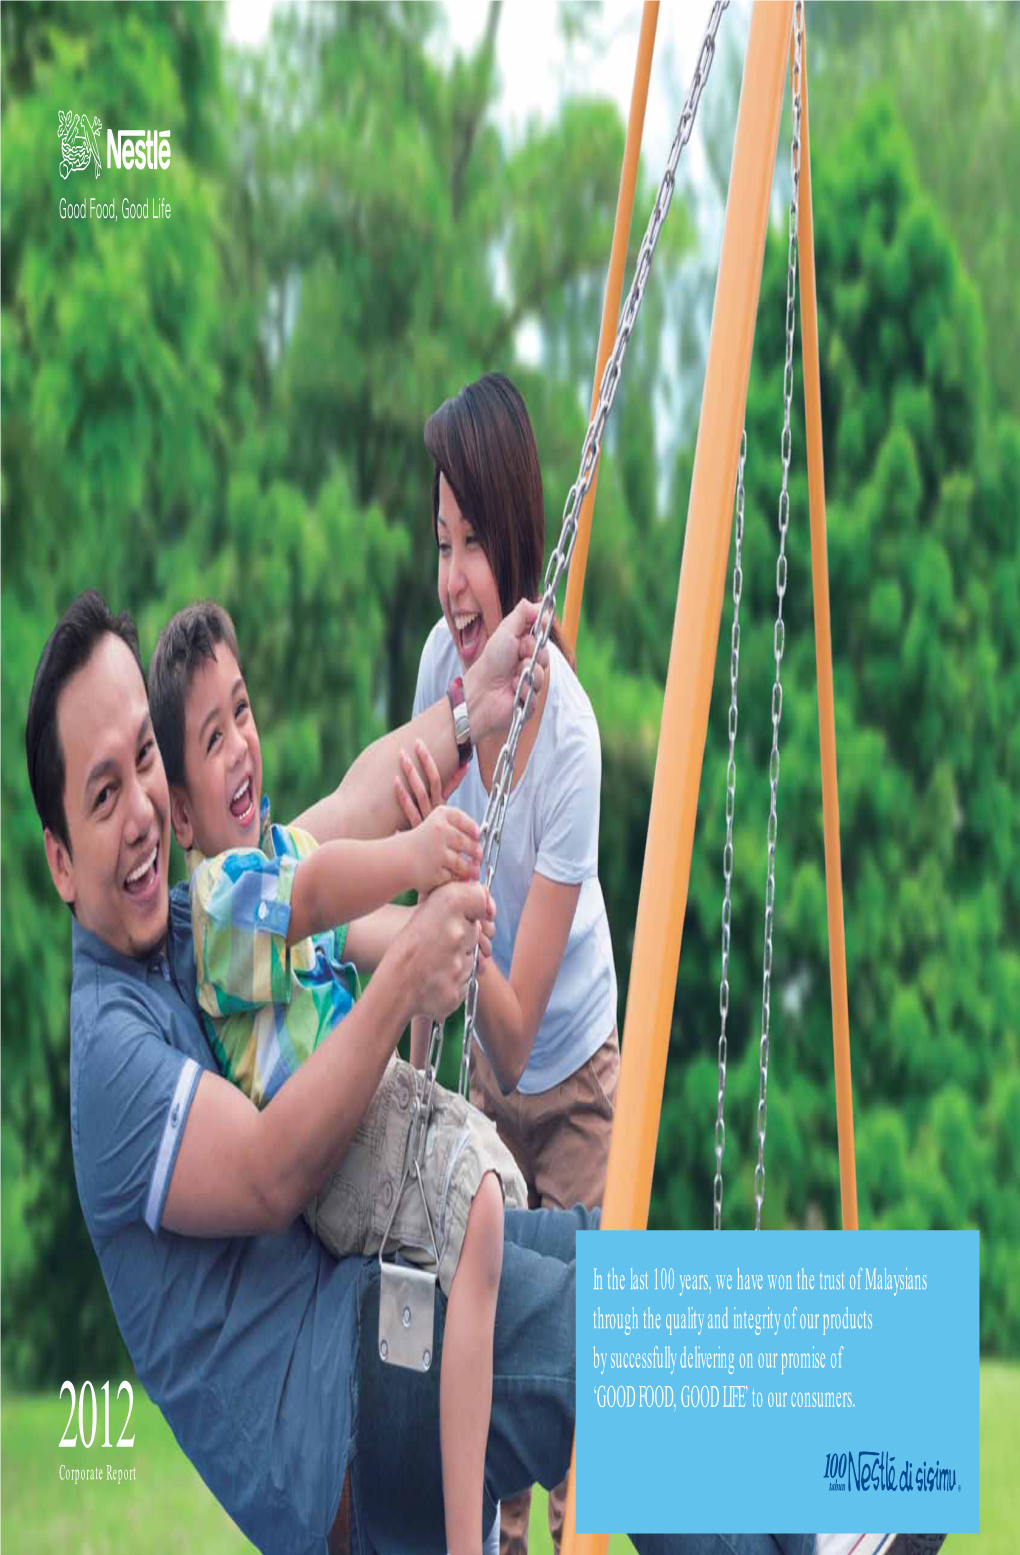 Nestlé Annual Report 2012